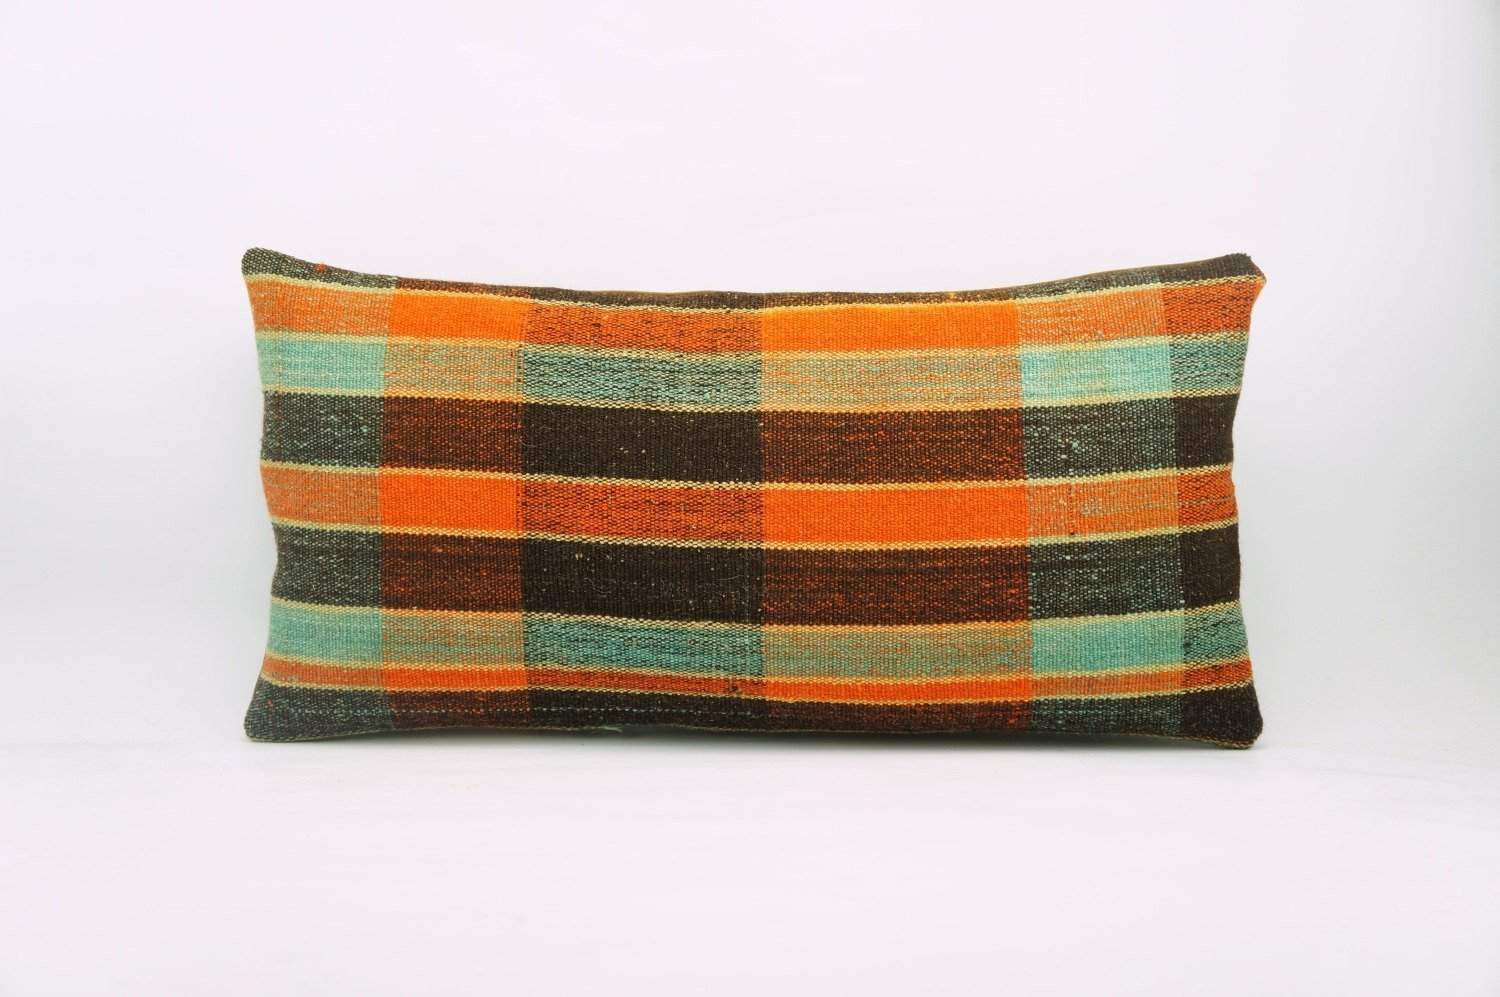 12x24 Vintage Hand Woven Kilim Pillow Lumbar Bohemian pillow case, Modern home decor  orange green brown  striped 977 - kilimpillowstore
 - 1